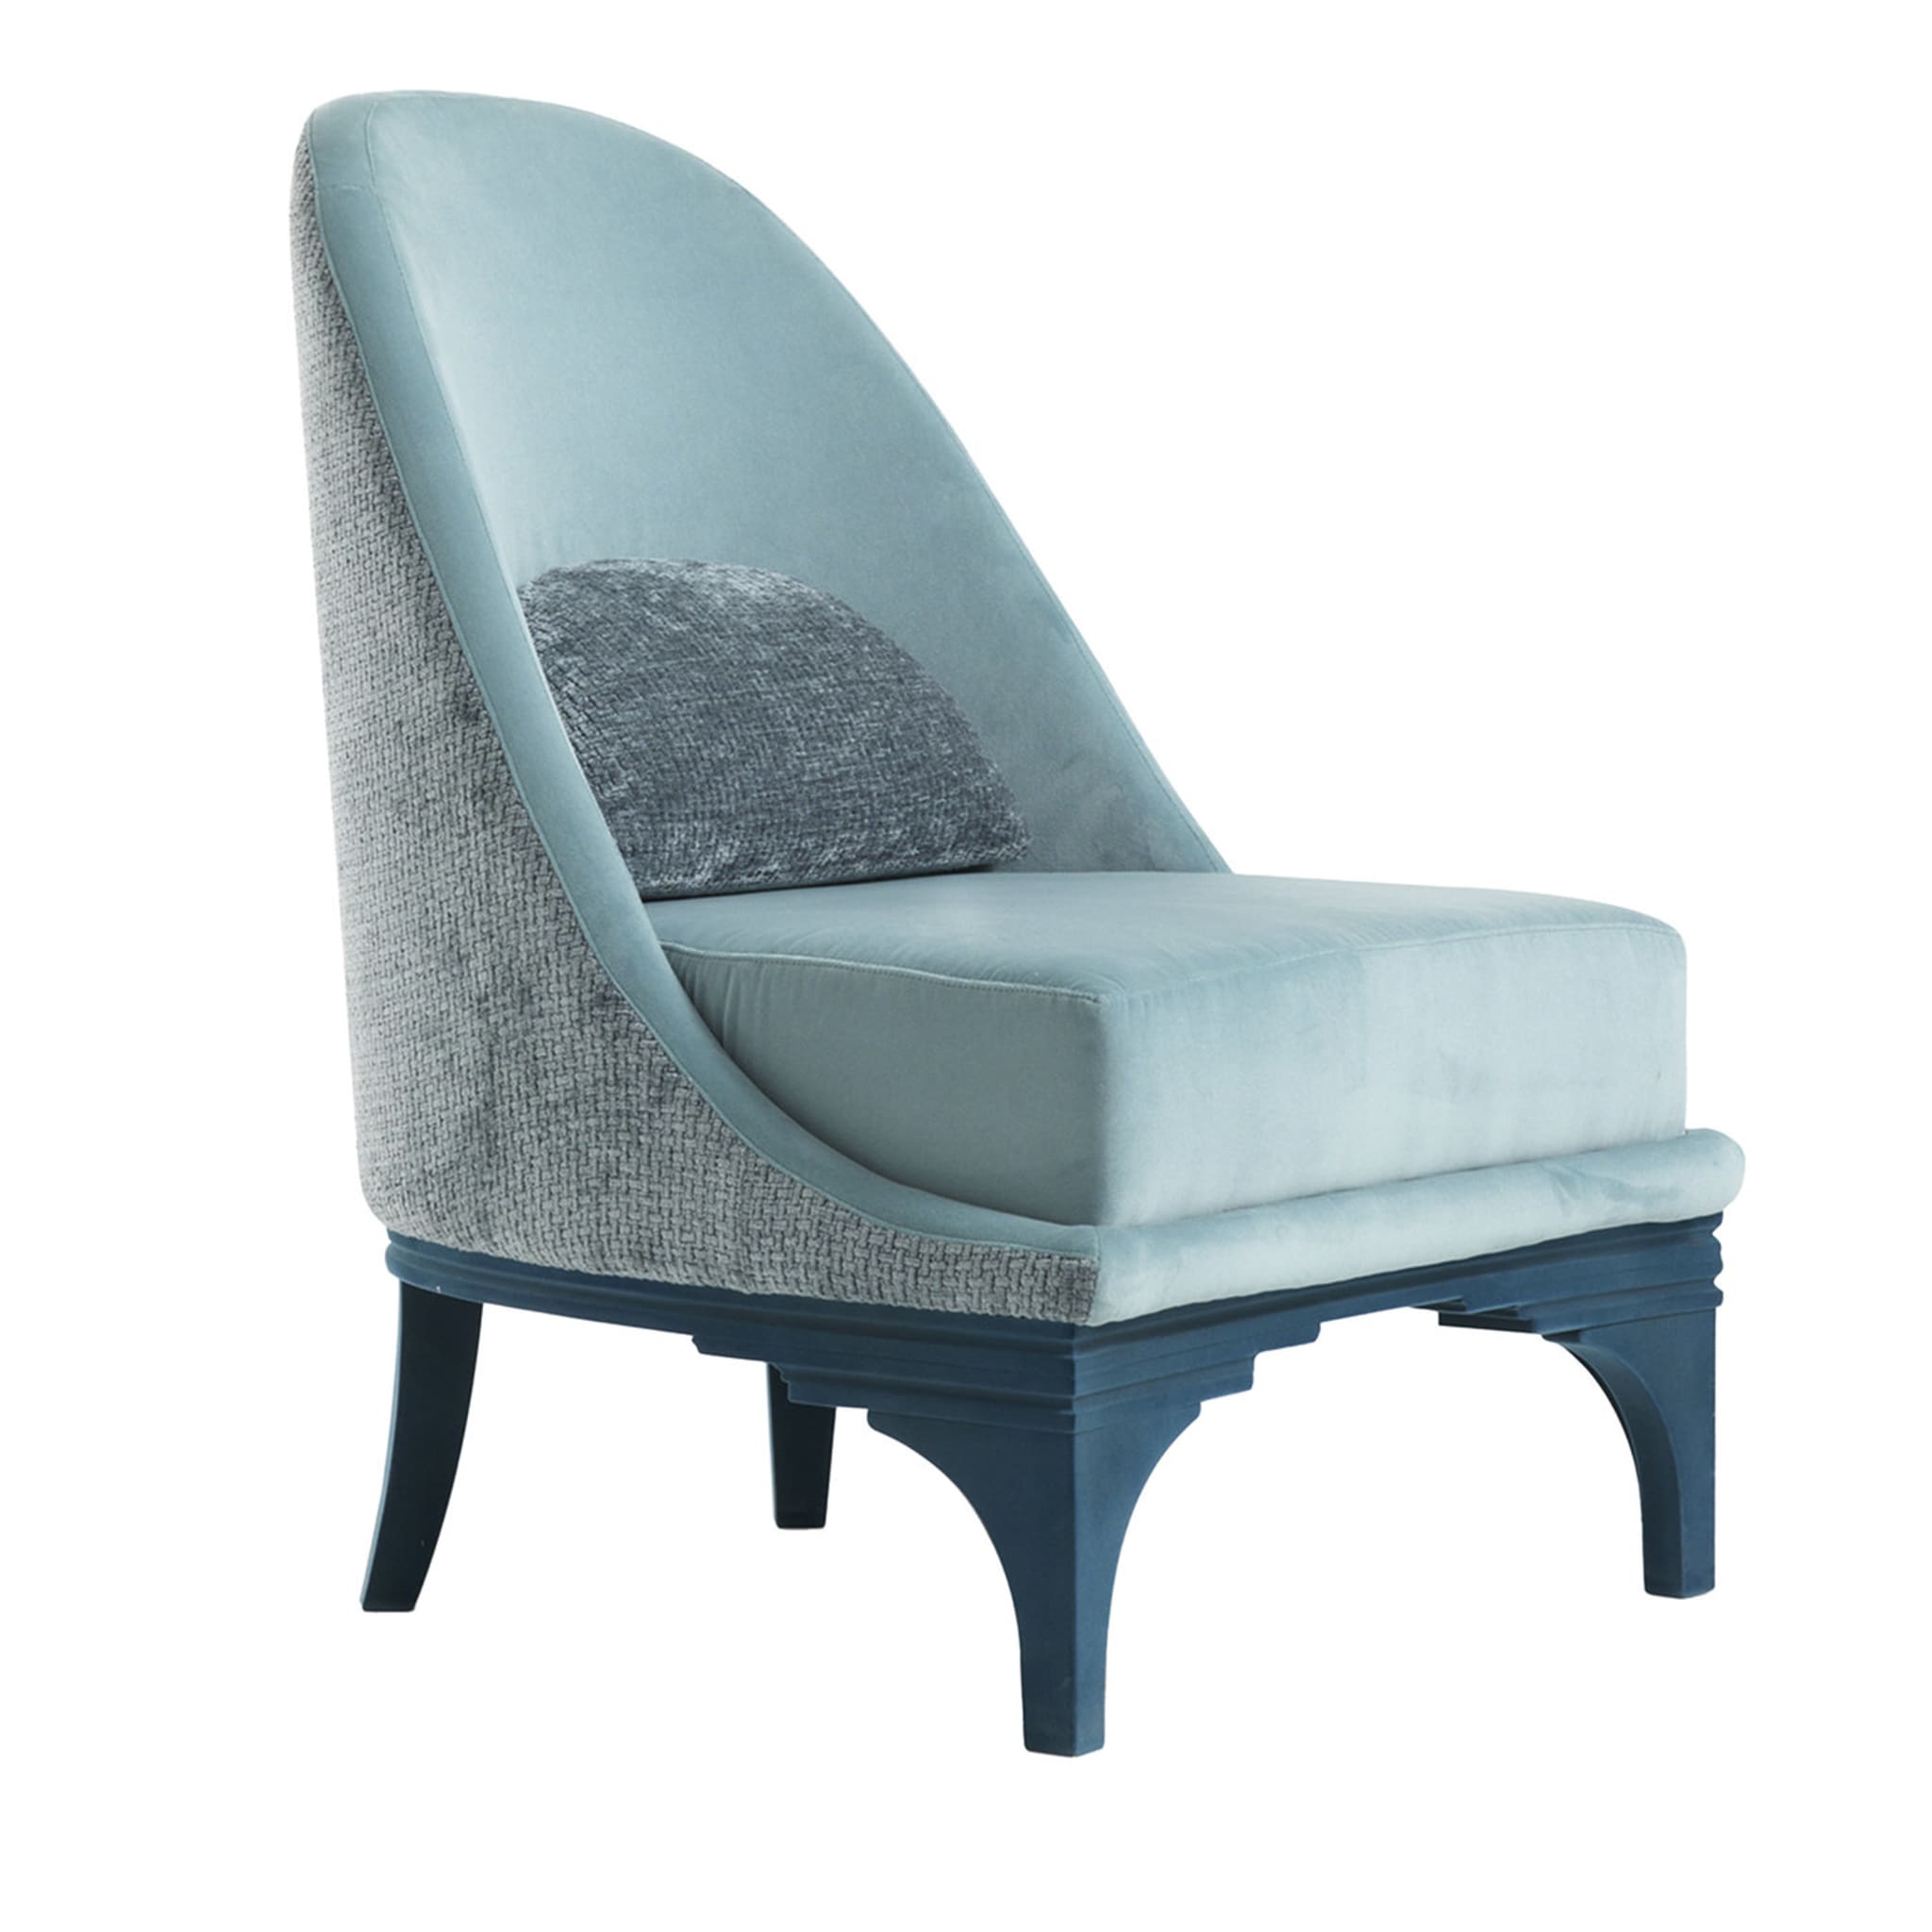 Duke Blue Lounge Chair by Alessio Mazza - Main view